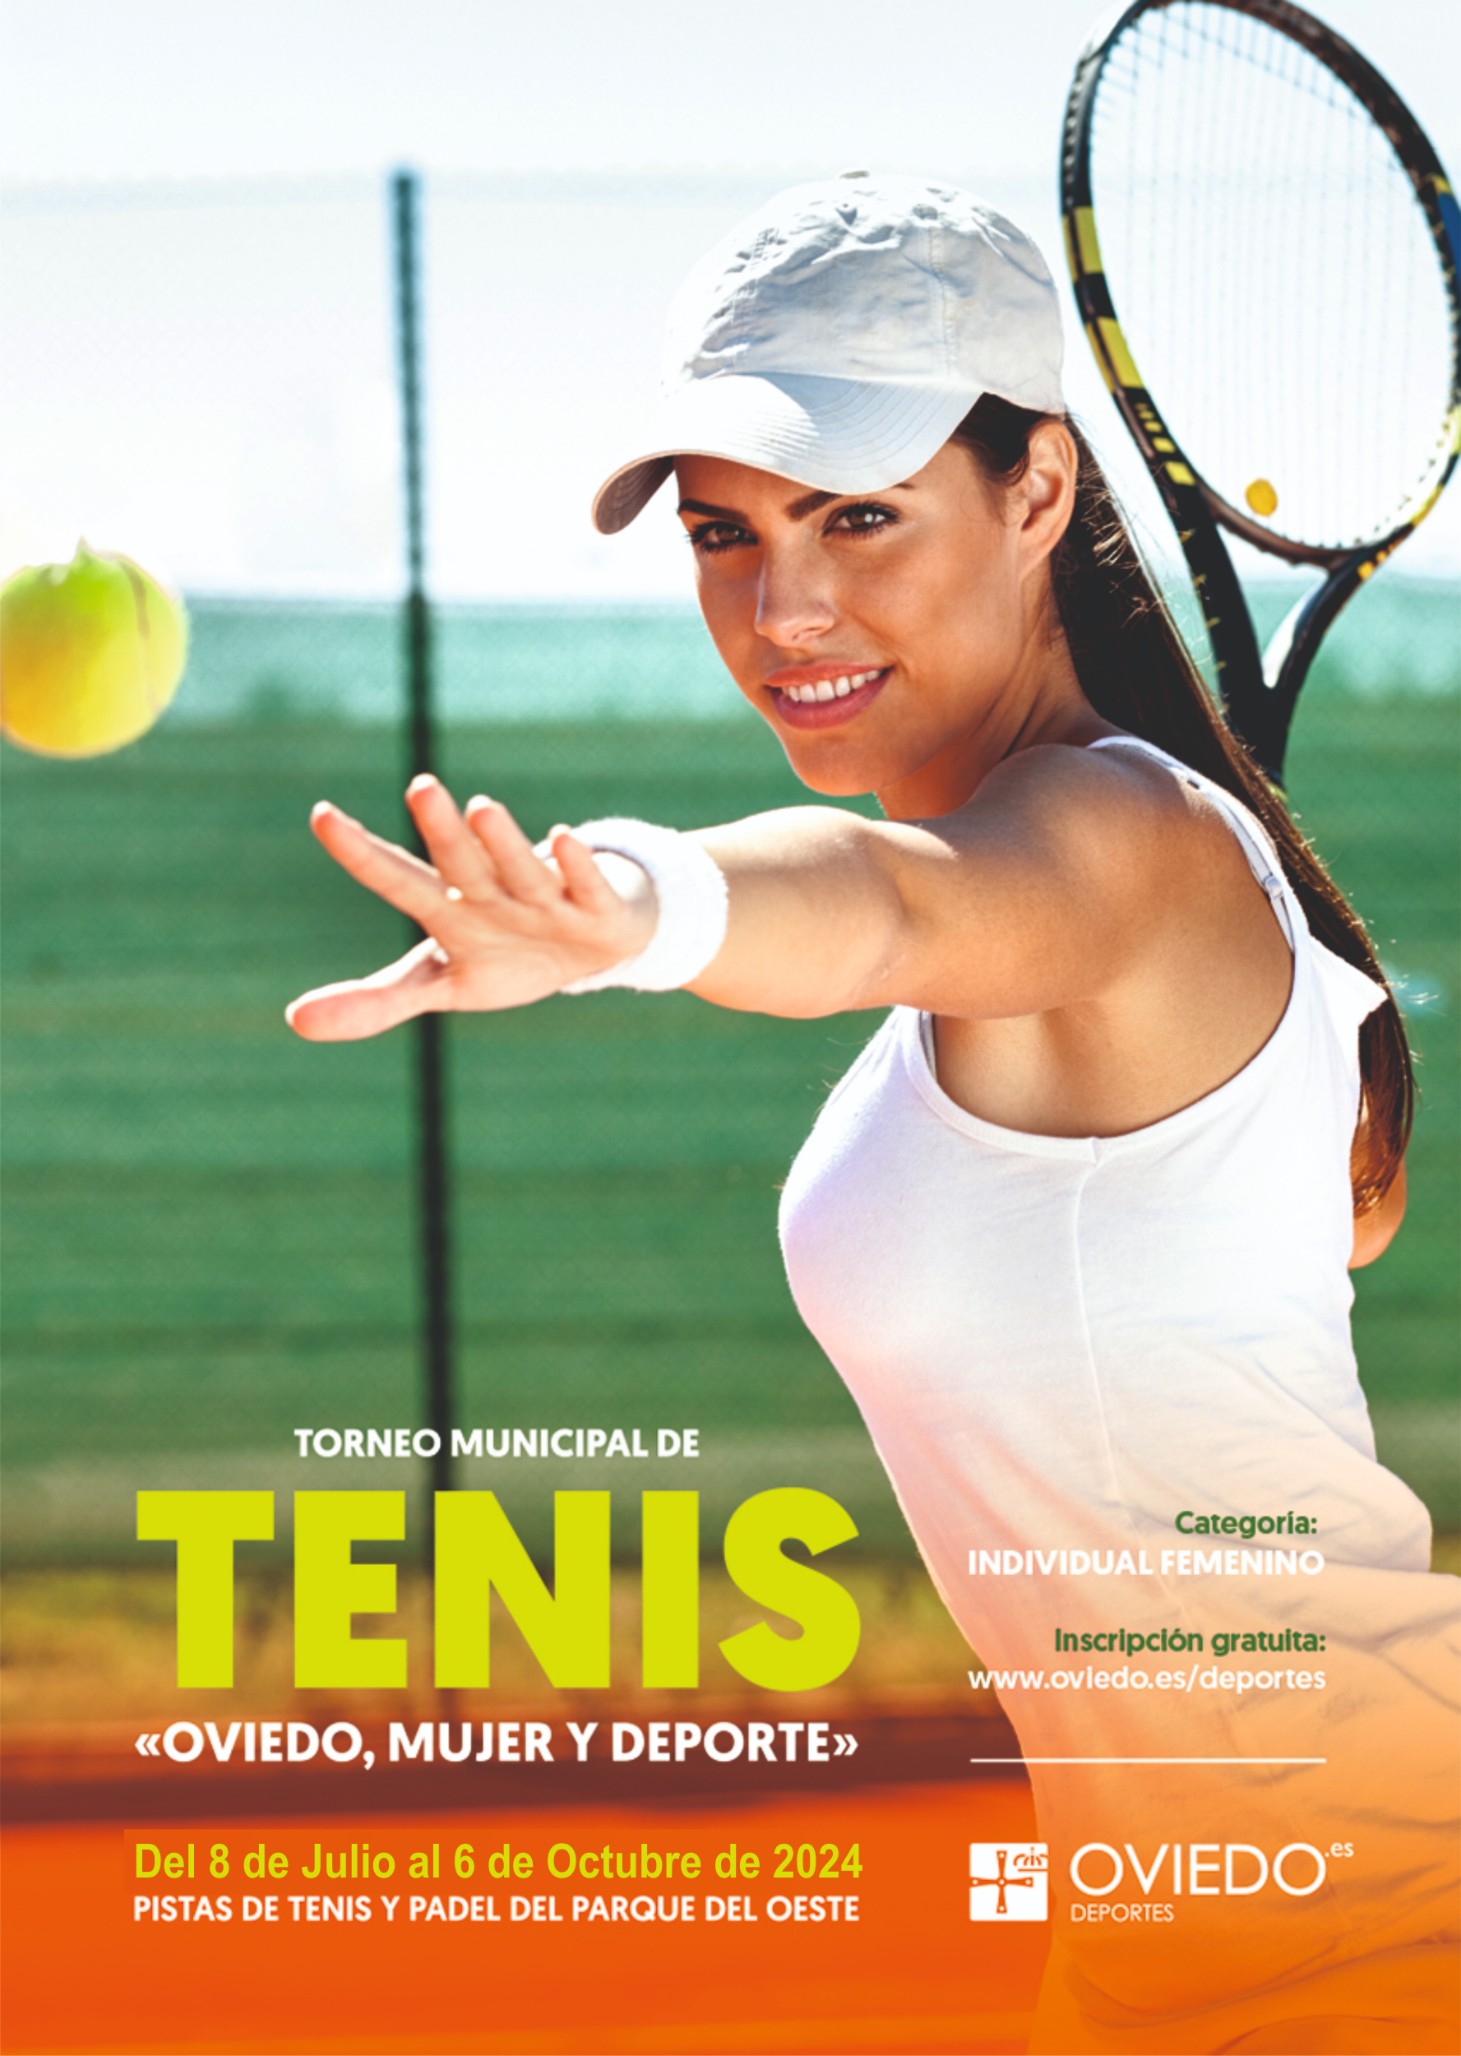 Torneo Tenis 2024. Oviedo, Mujer y Deporte